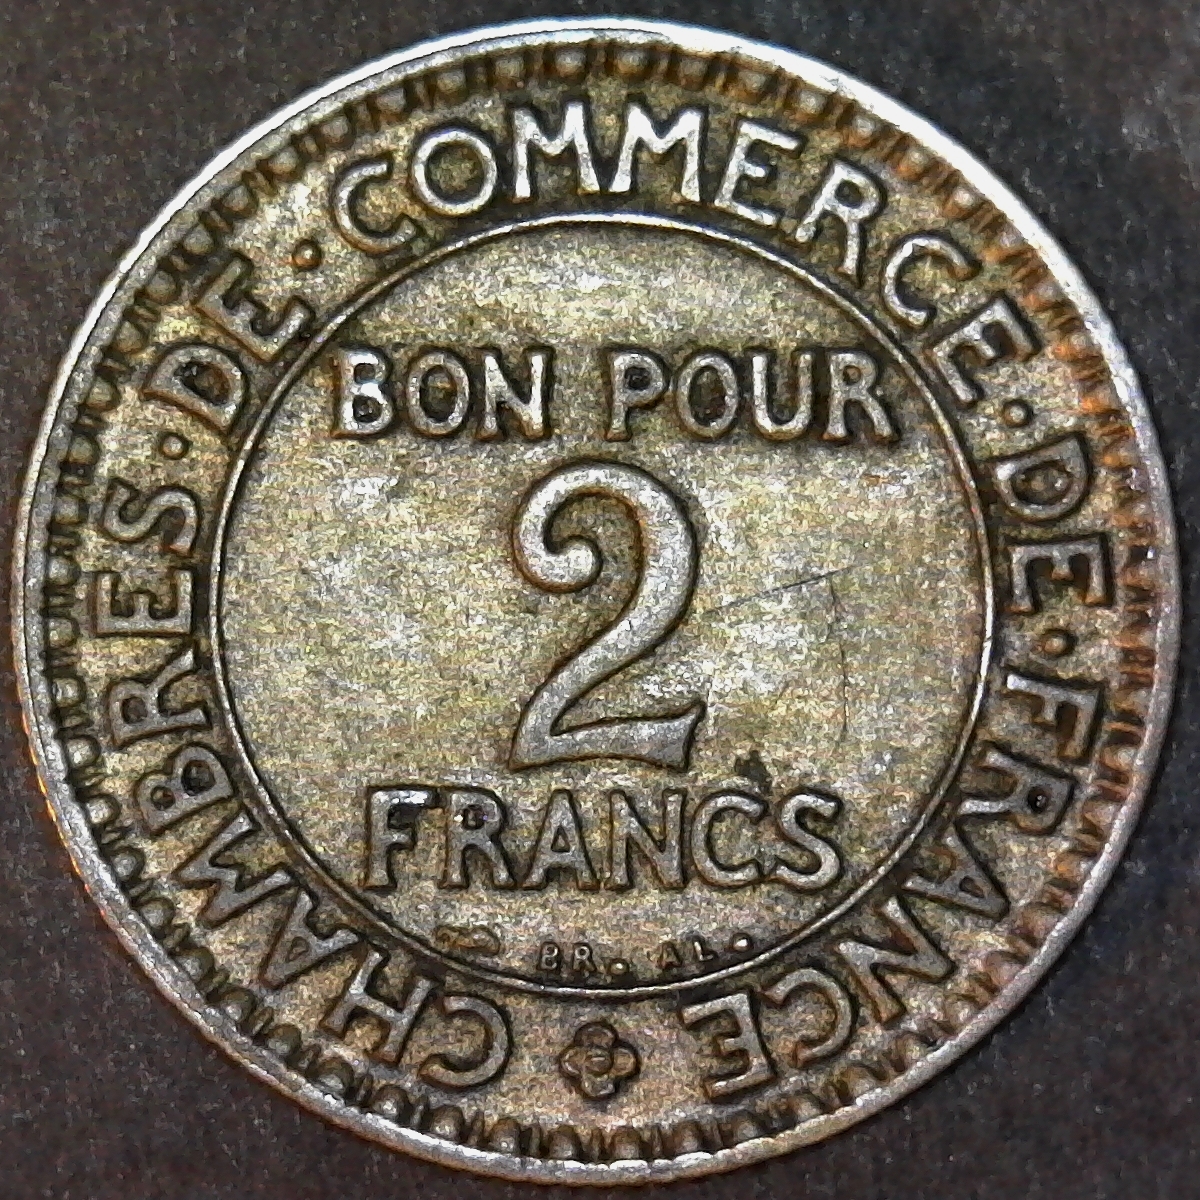 France 2 Francs 1923 obverse less 5.jpg